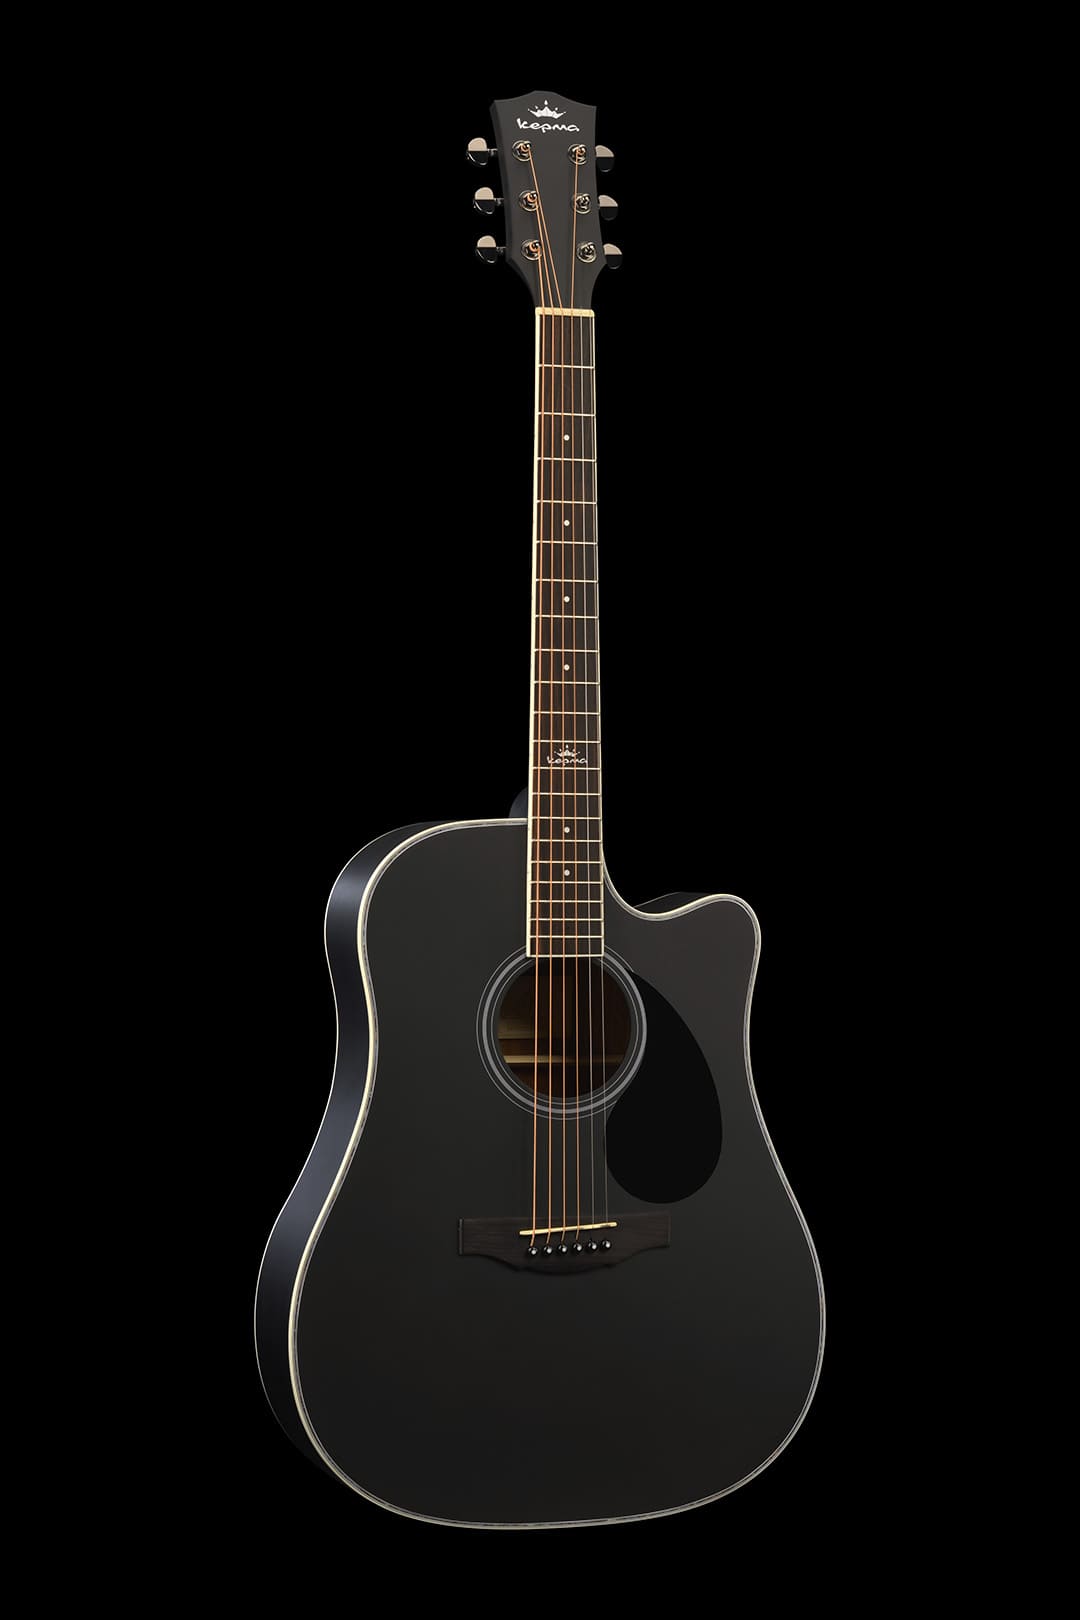 KEPMA D1C Glossy Black акустическая гитара, цвет чёрный глянцевый